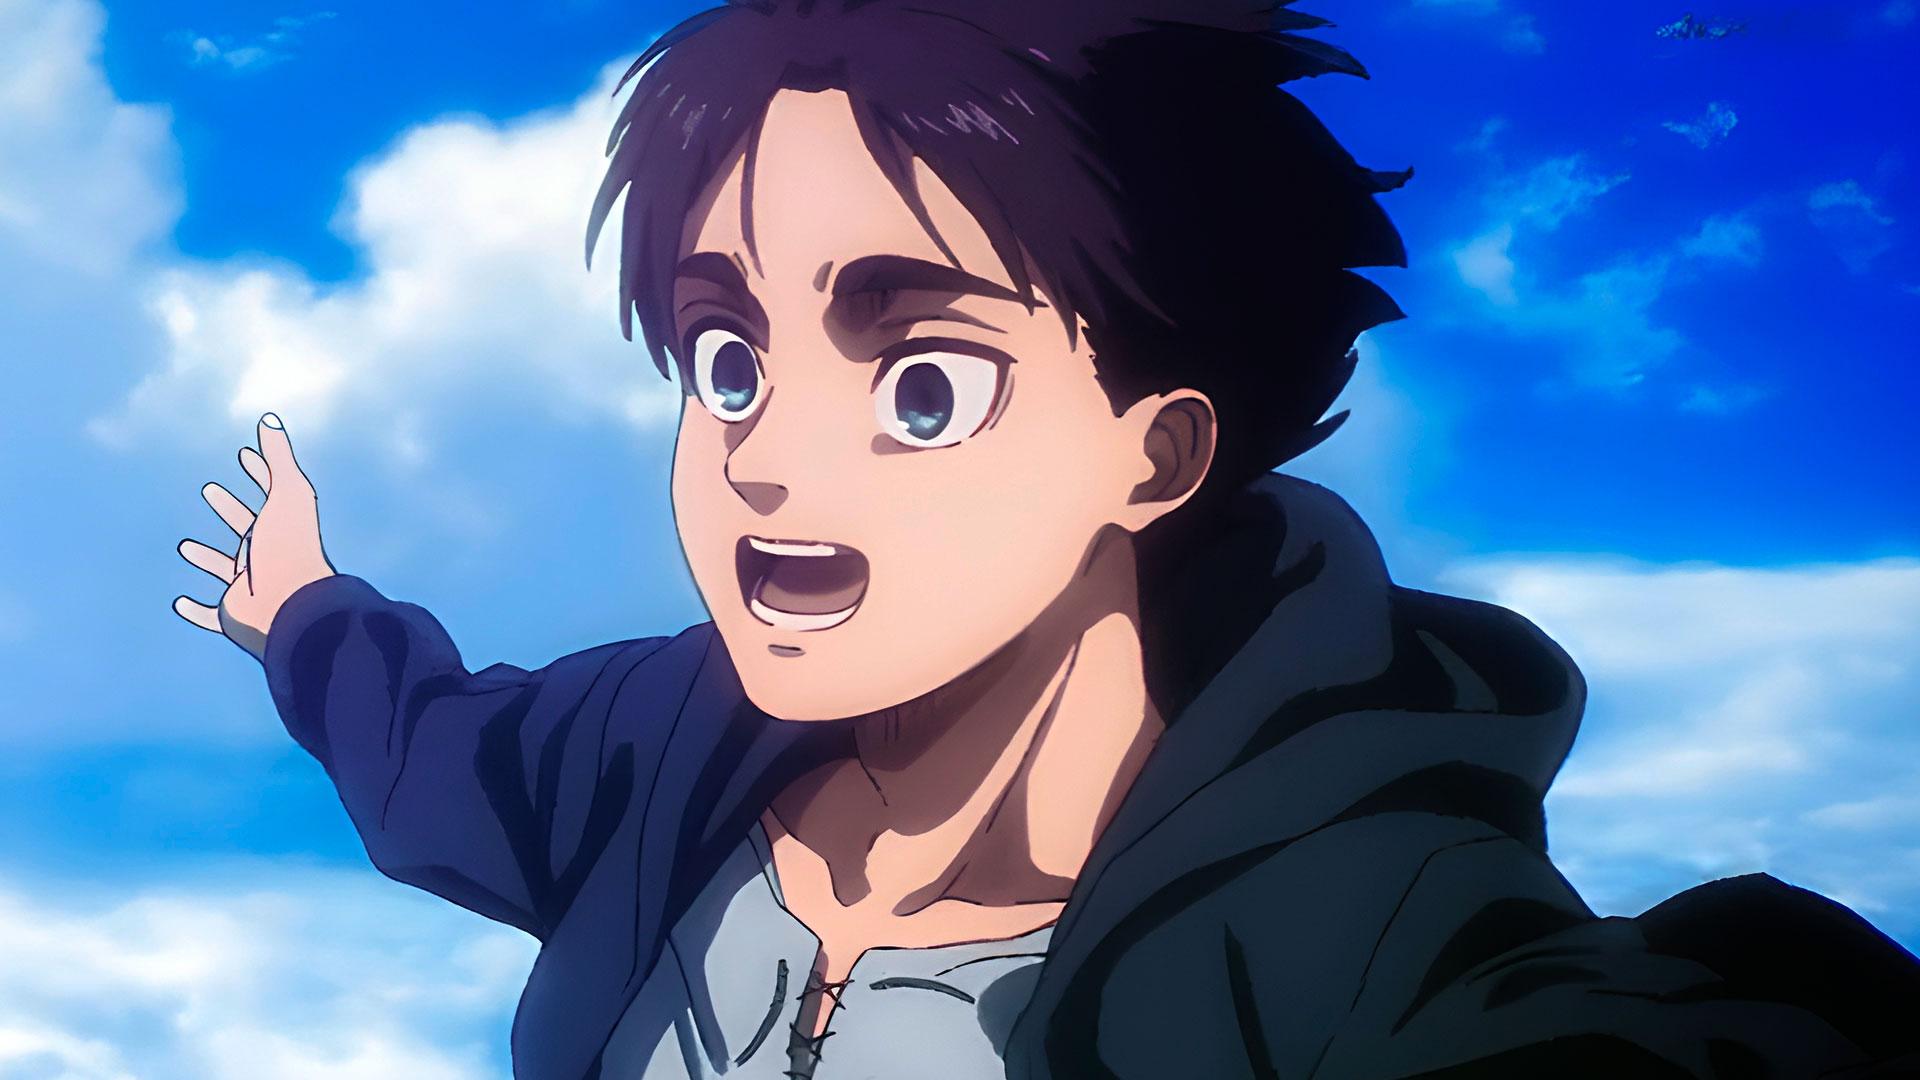 Shingeki Dos Animes - Um novo filme da franquia Shingeki no Kyojin